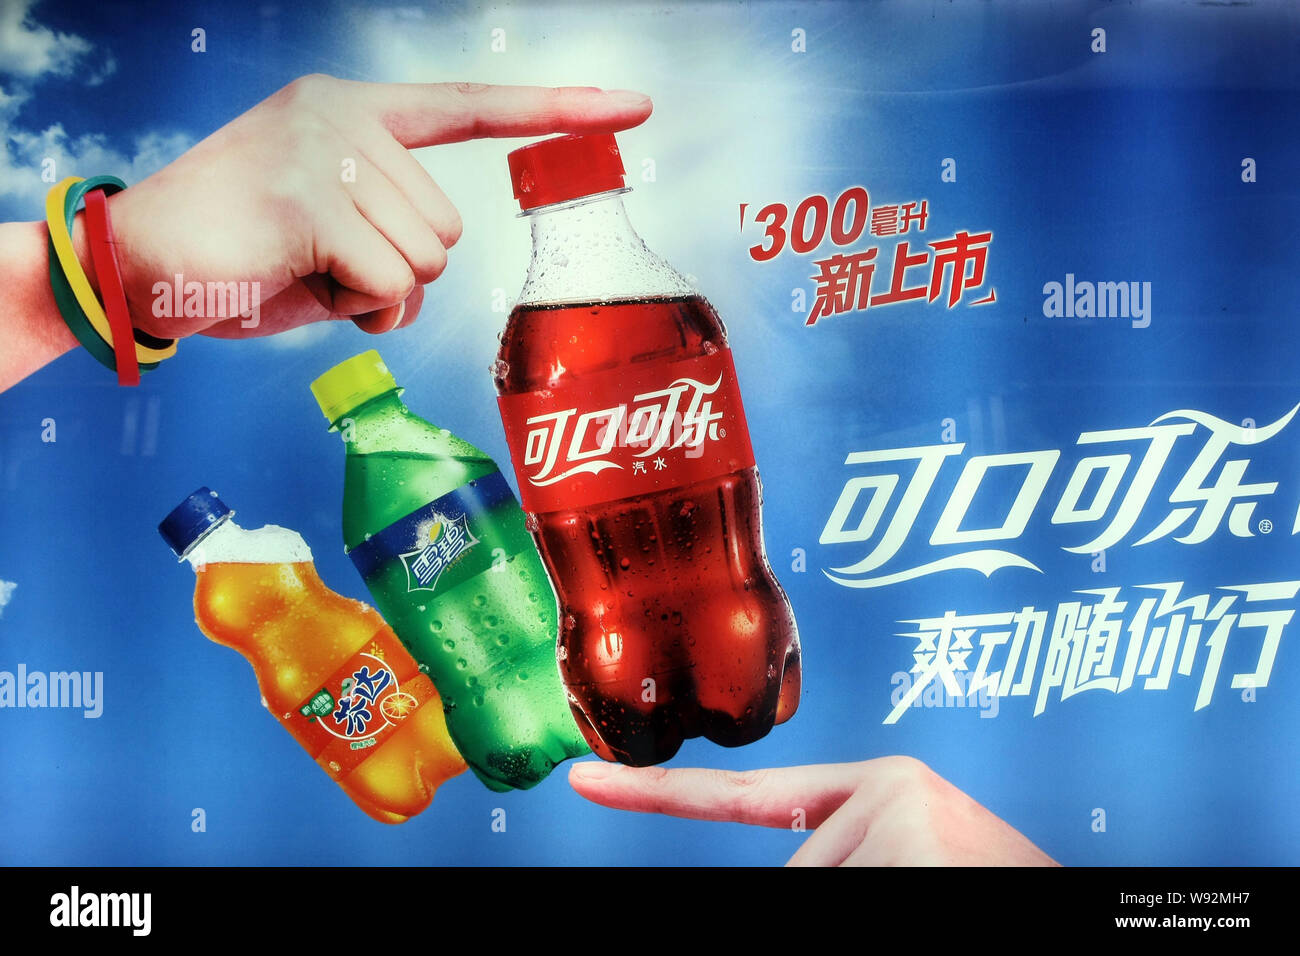 soda advertisement